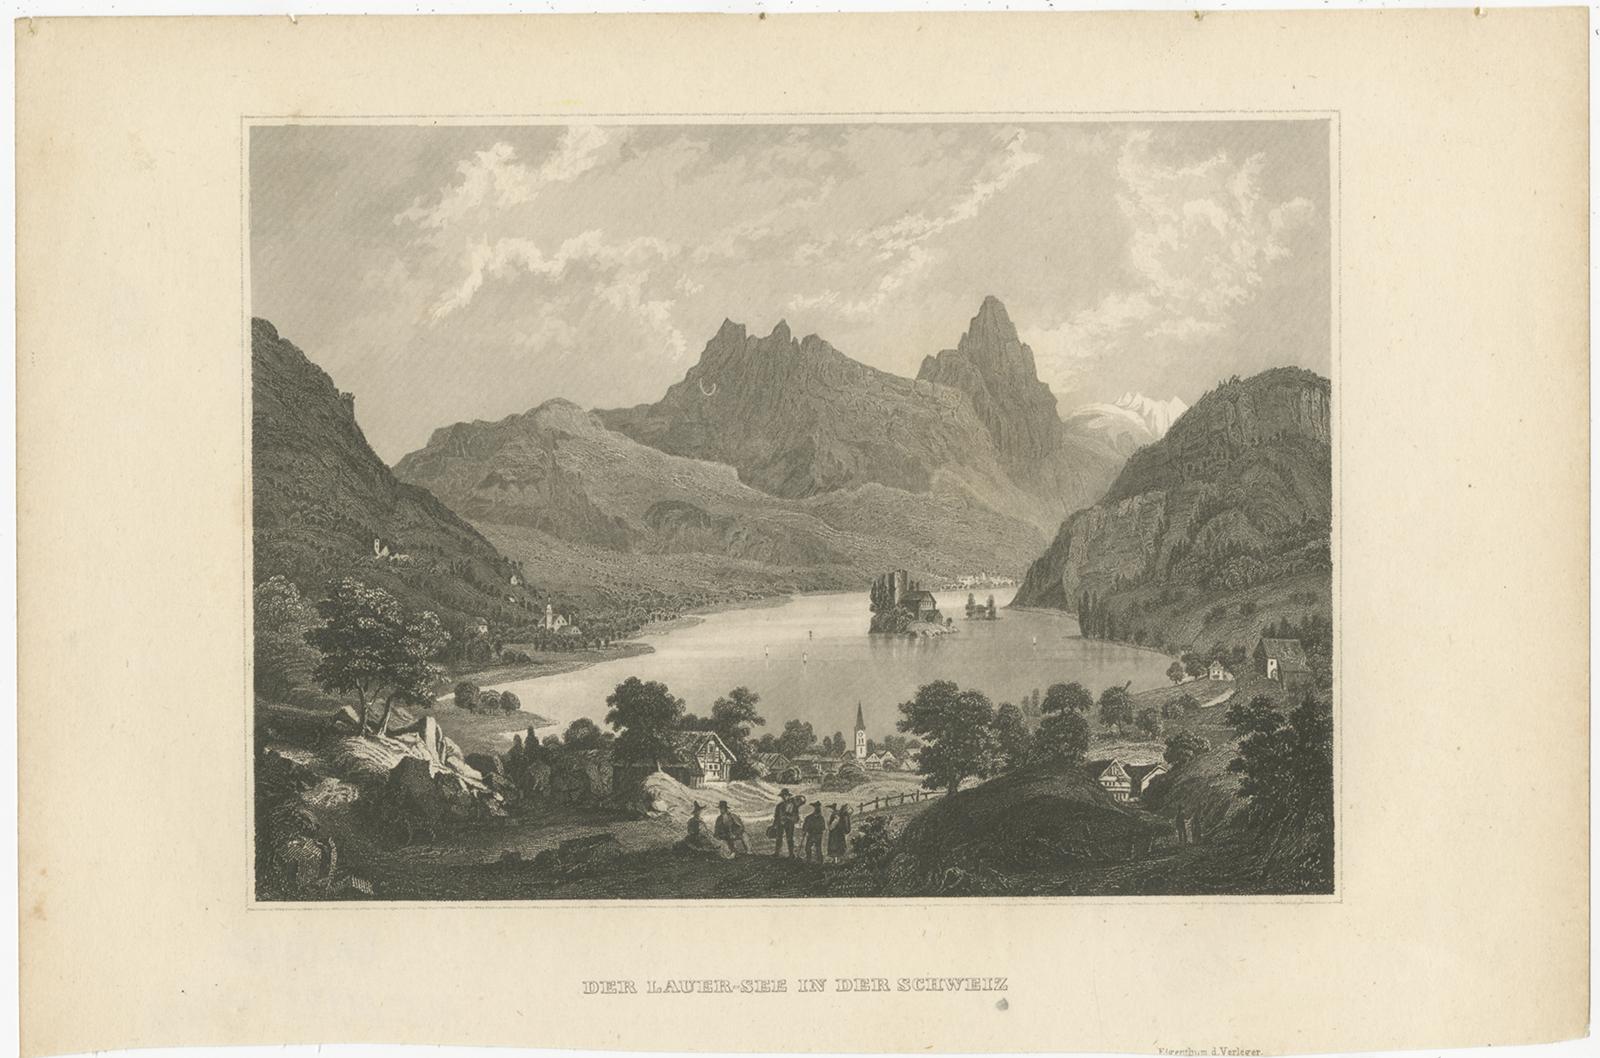 Antique print titled 'Der Lauer-See in der Schweiz'. View of Lake Lauerz, a lake in the Canton of Schwyz, Switzerland. Originates from 'Meyers Universum'. Published circa 1850.

Joseph Meyer (May 9, 1796 - June 27, 1856) was a German industrialist